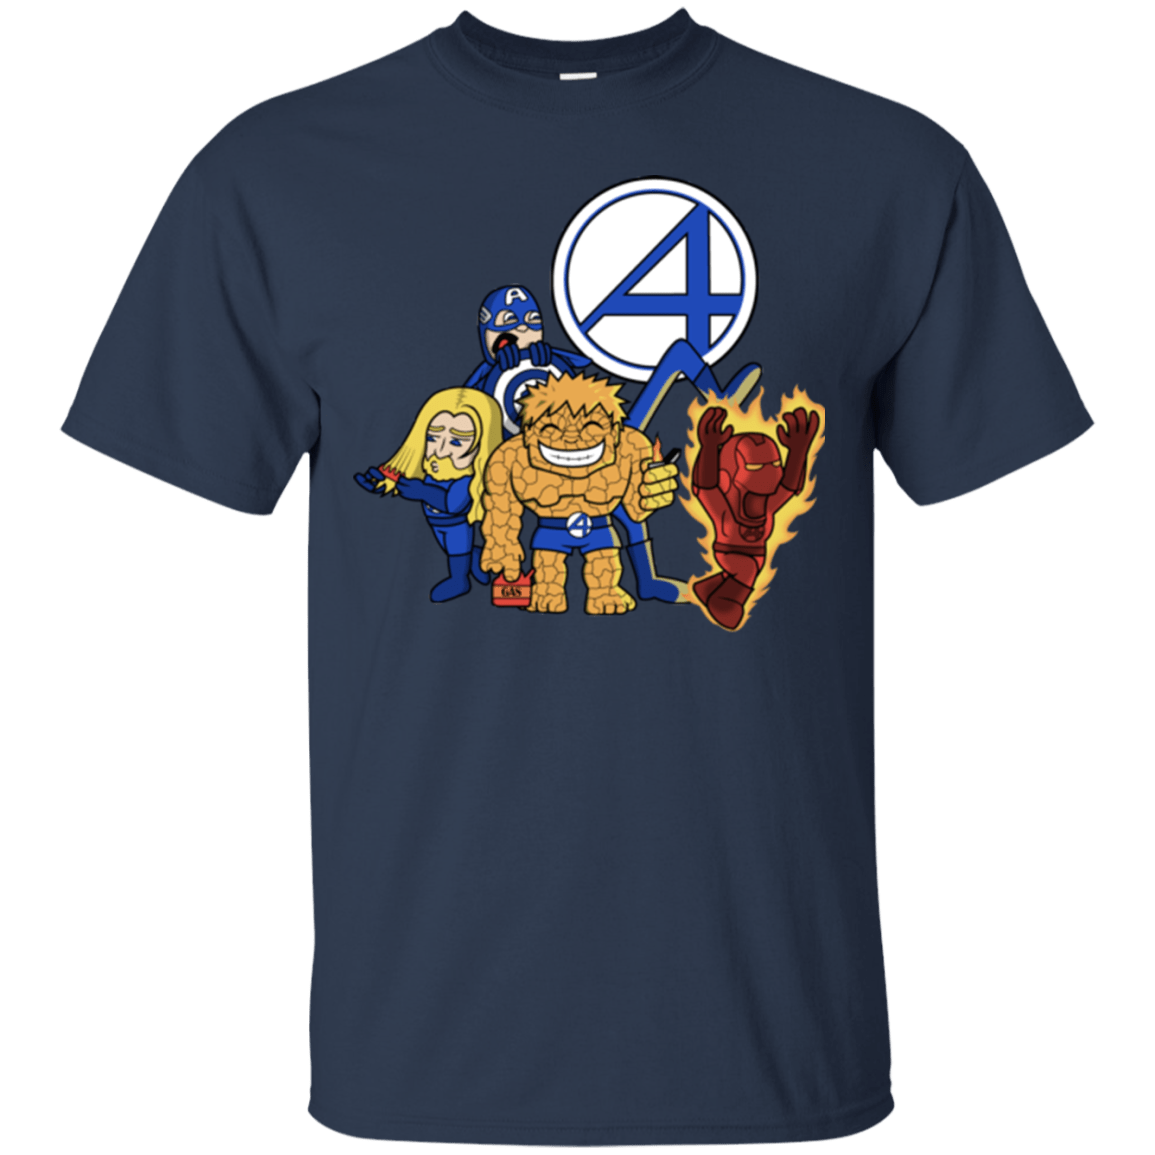 T-Shirts Navy / S FANTASTIC-A T-Shirt